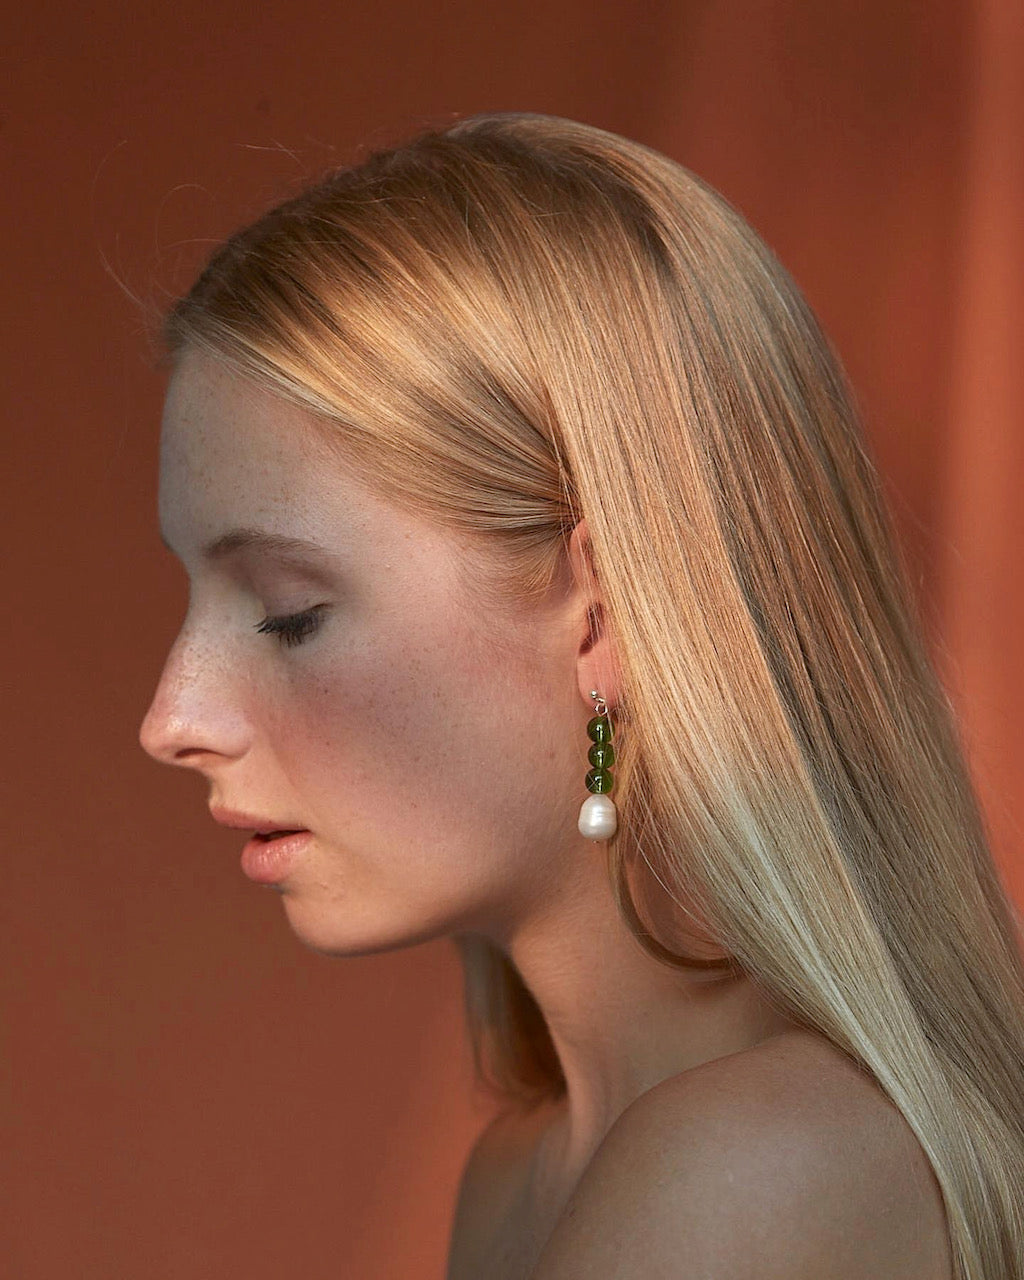 A woman wearing a pair of Jealousy Drops earrings from Avara Studio.